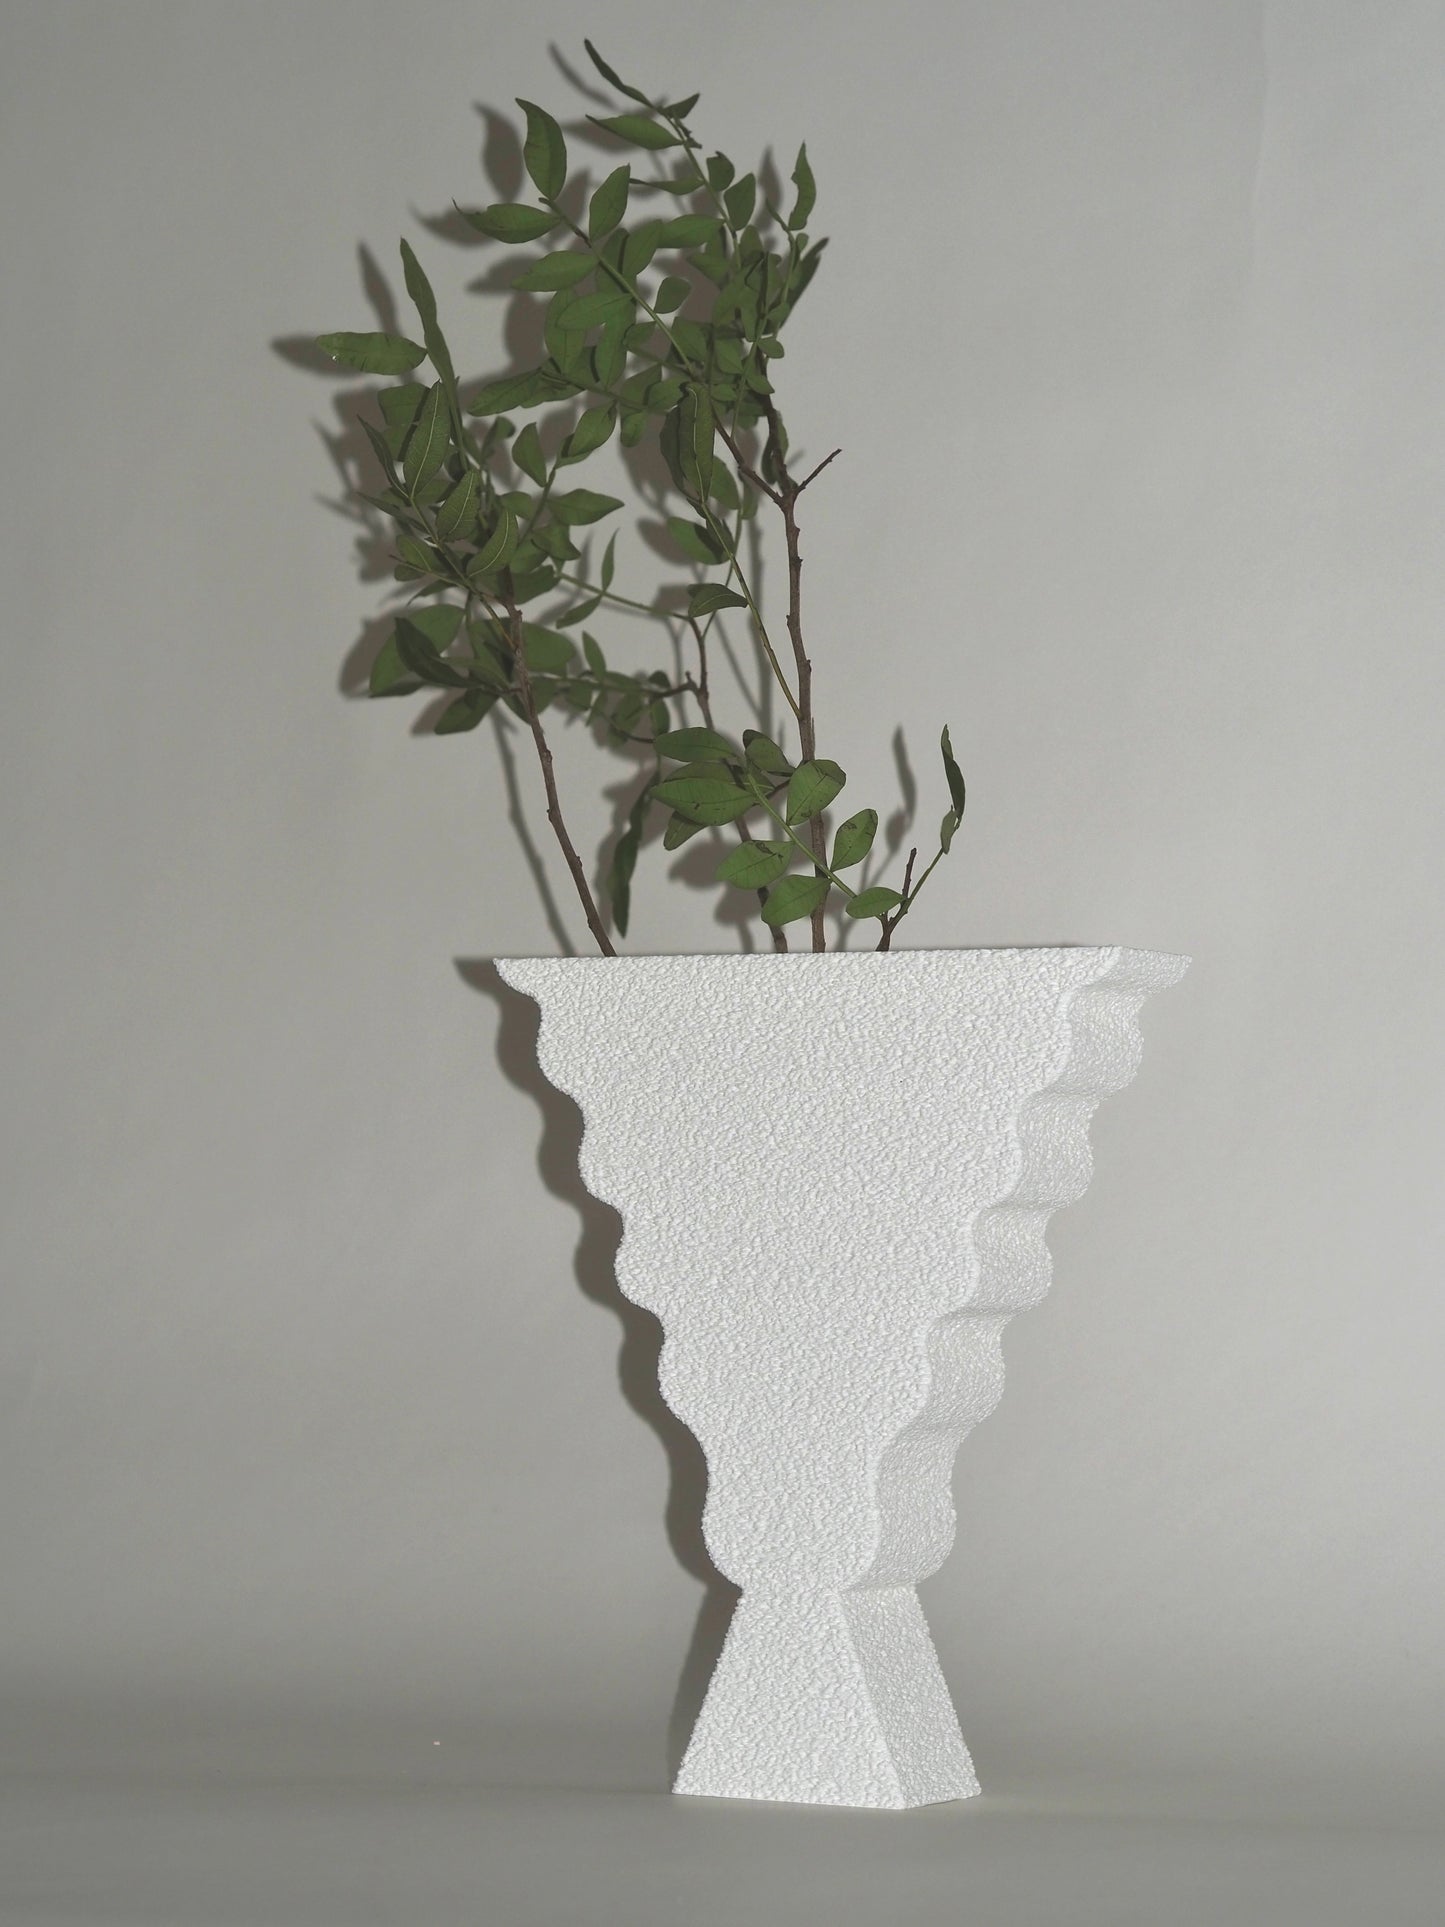 3D printed contemporary vase